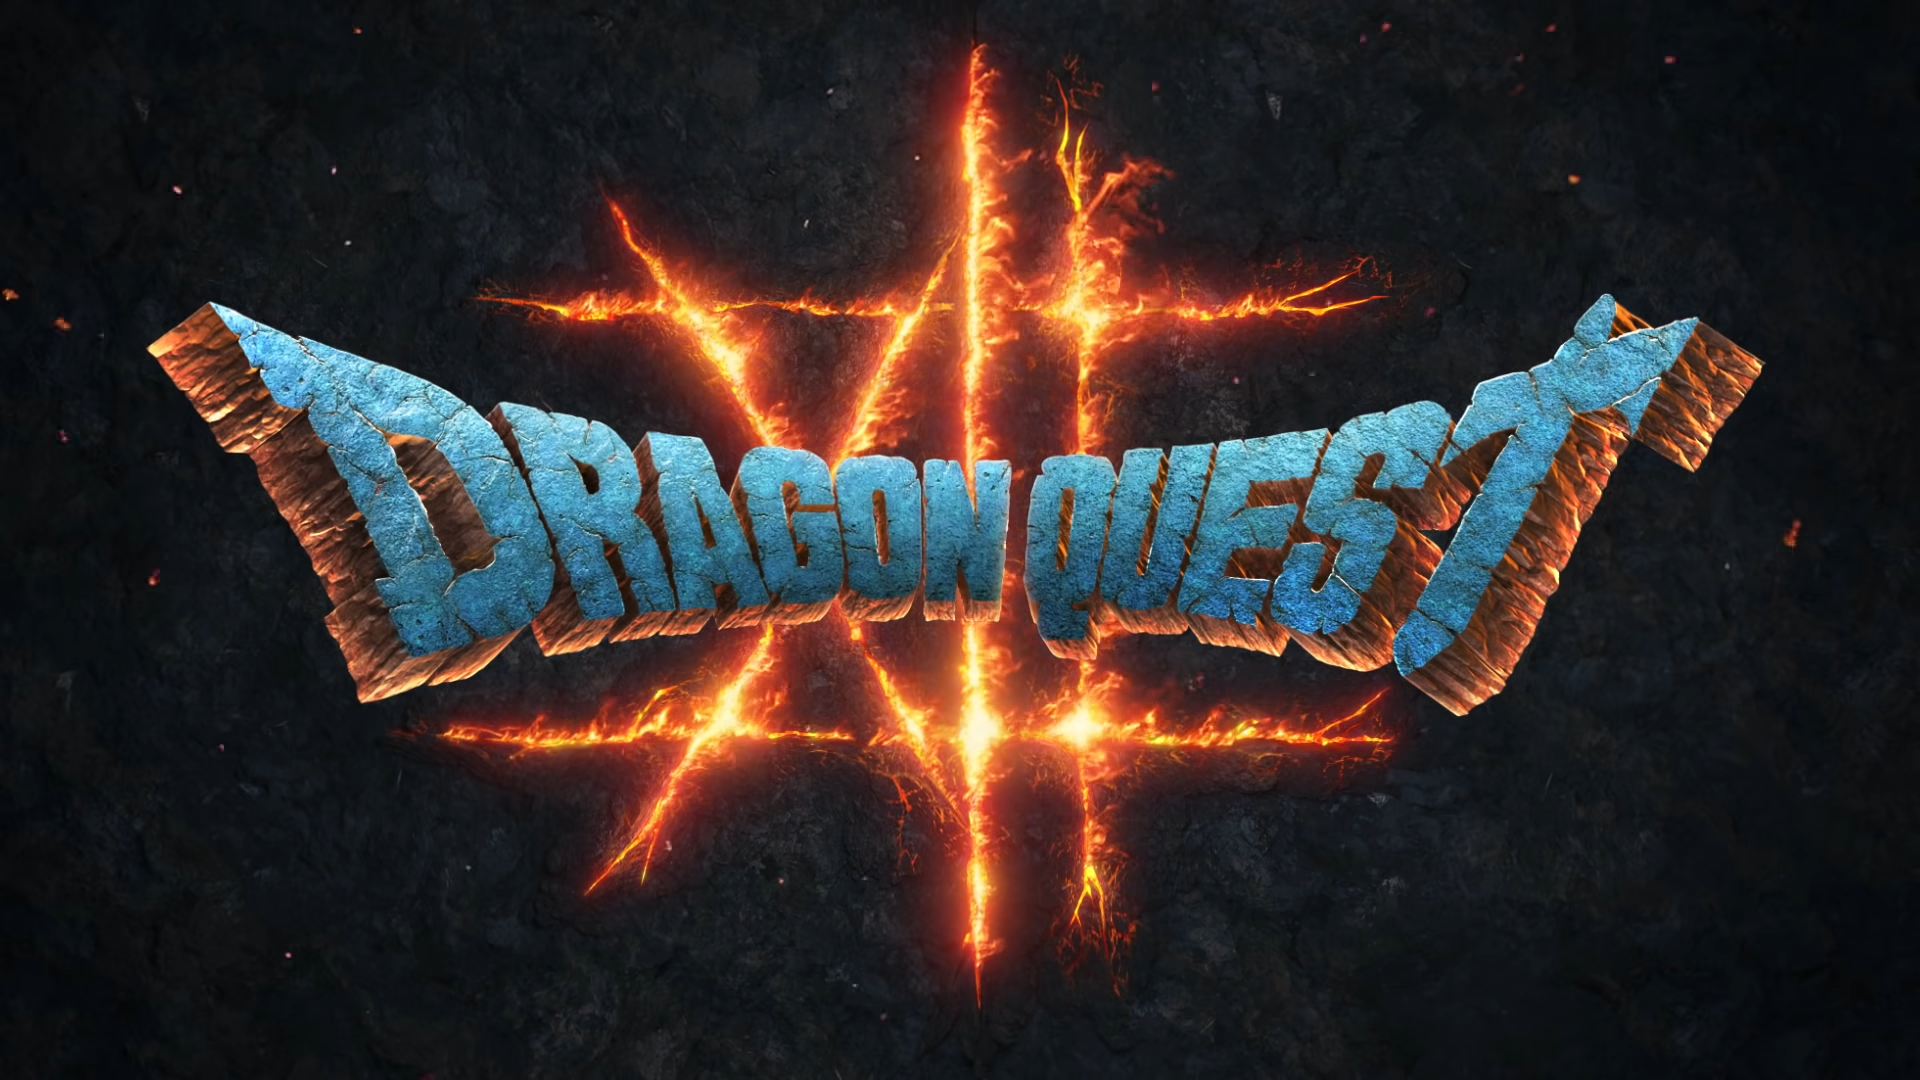 Dragon Quest 12 is in Development